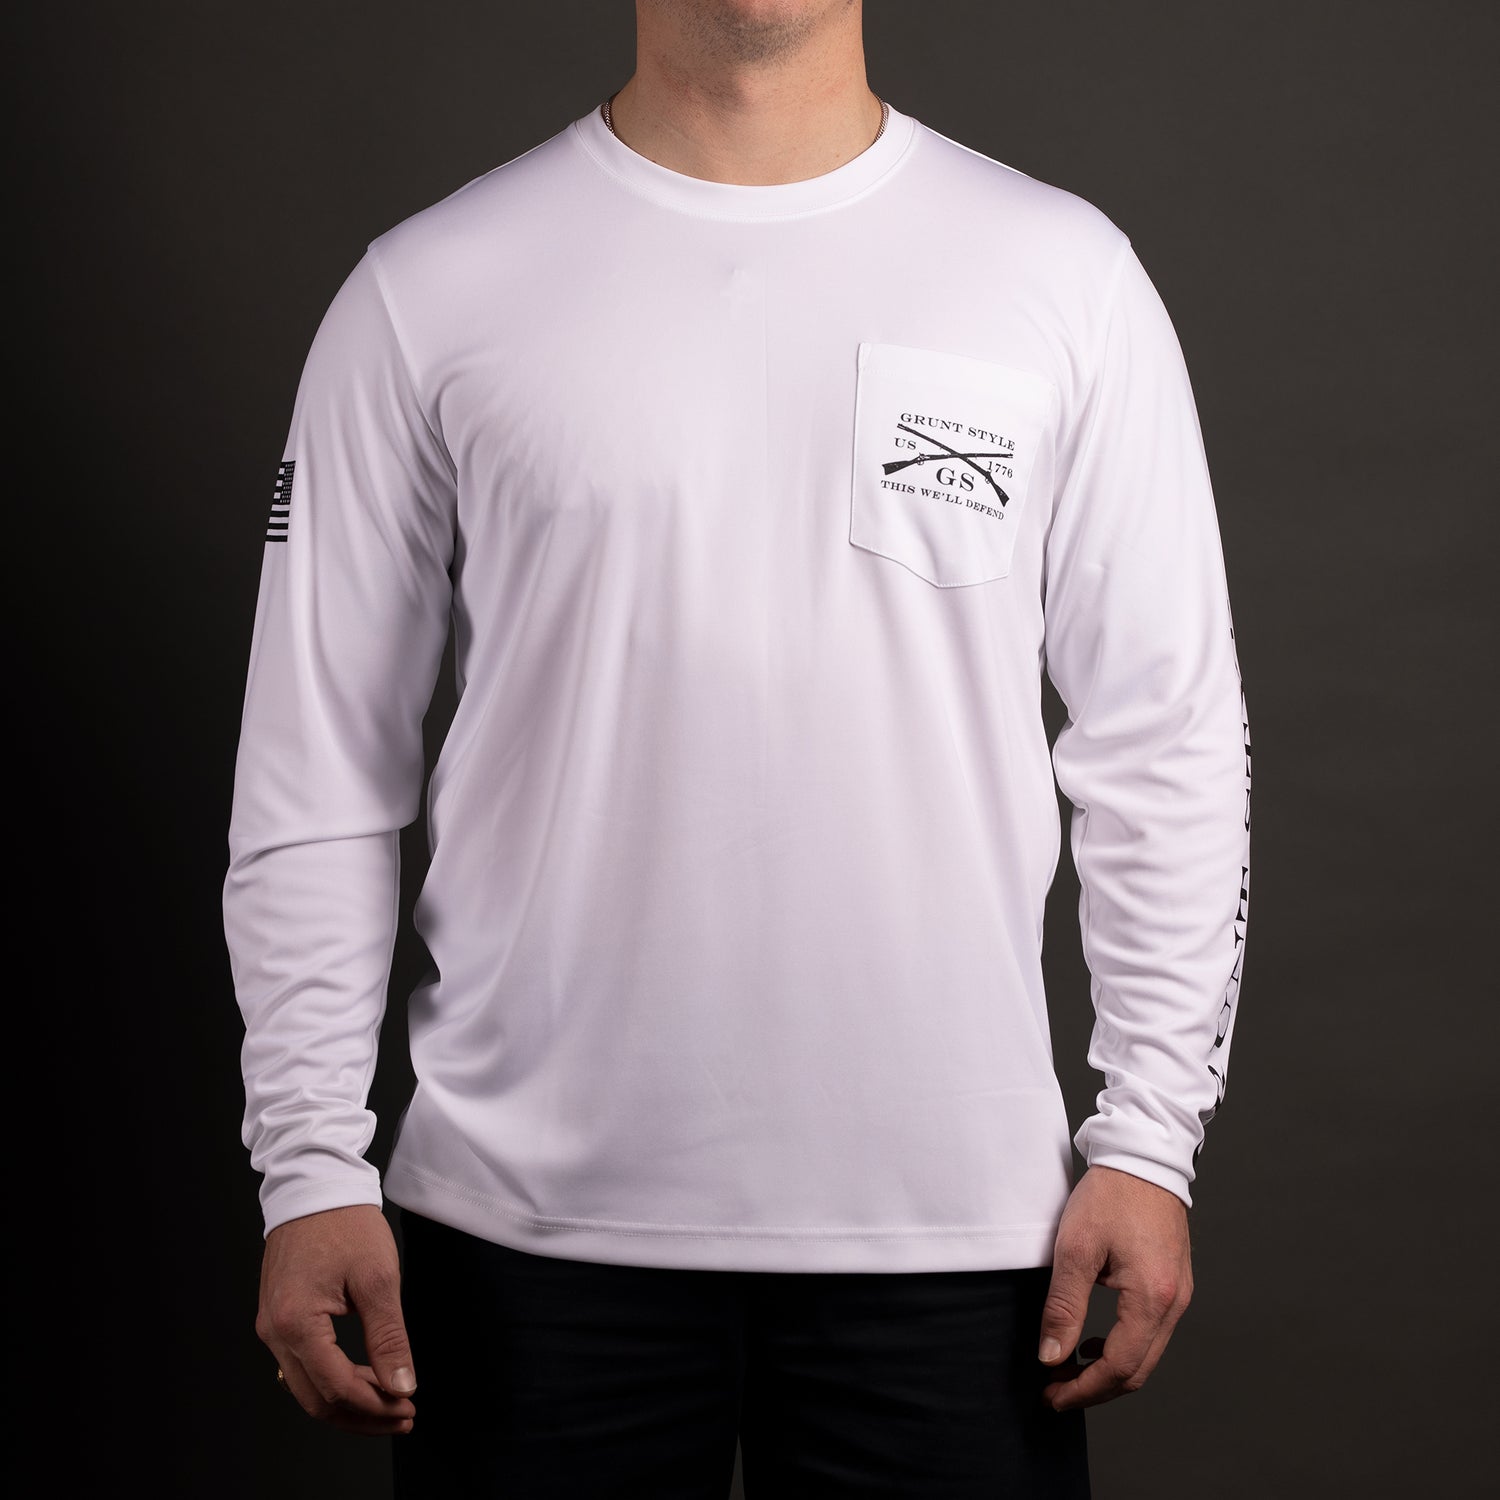 Men's Long Sleeve Fishing Shirt in White